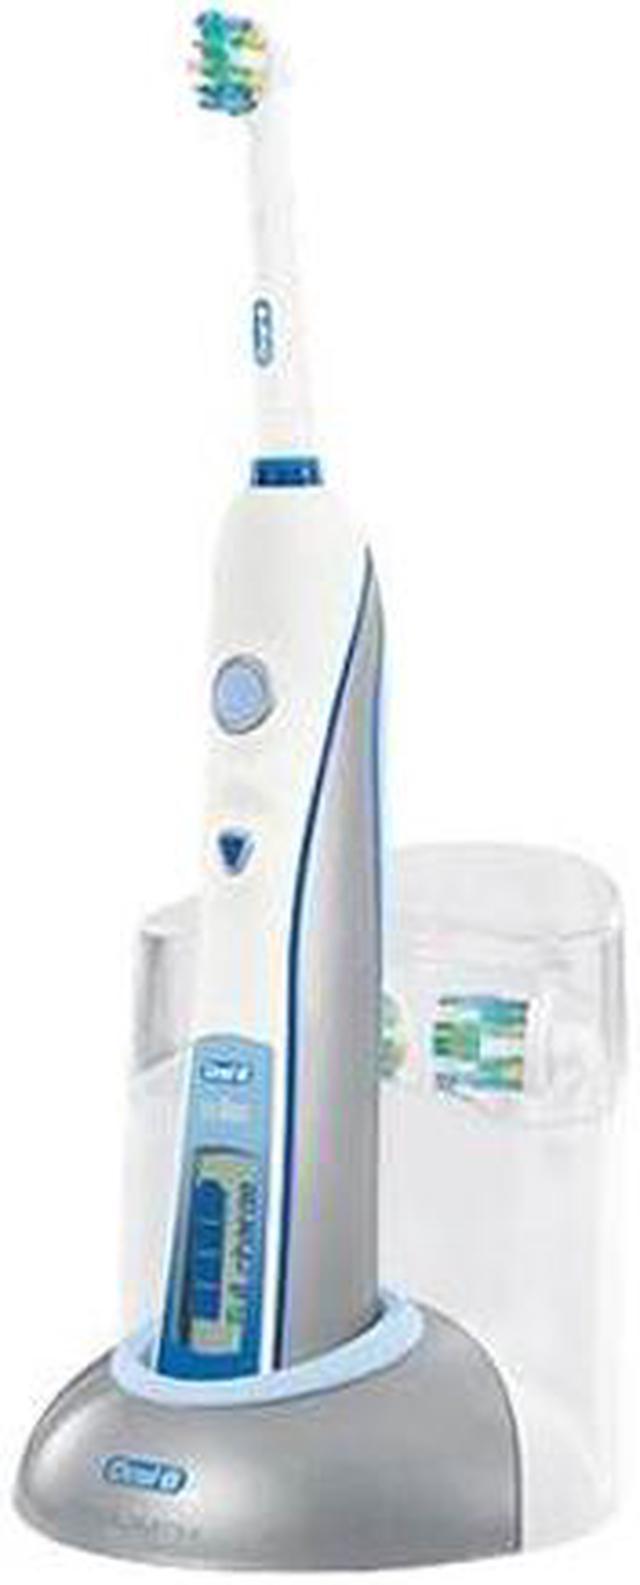 Oral-B D25526 Triumph Pro Care 9400 Orab-B Plaque Remover Toothbrush 